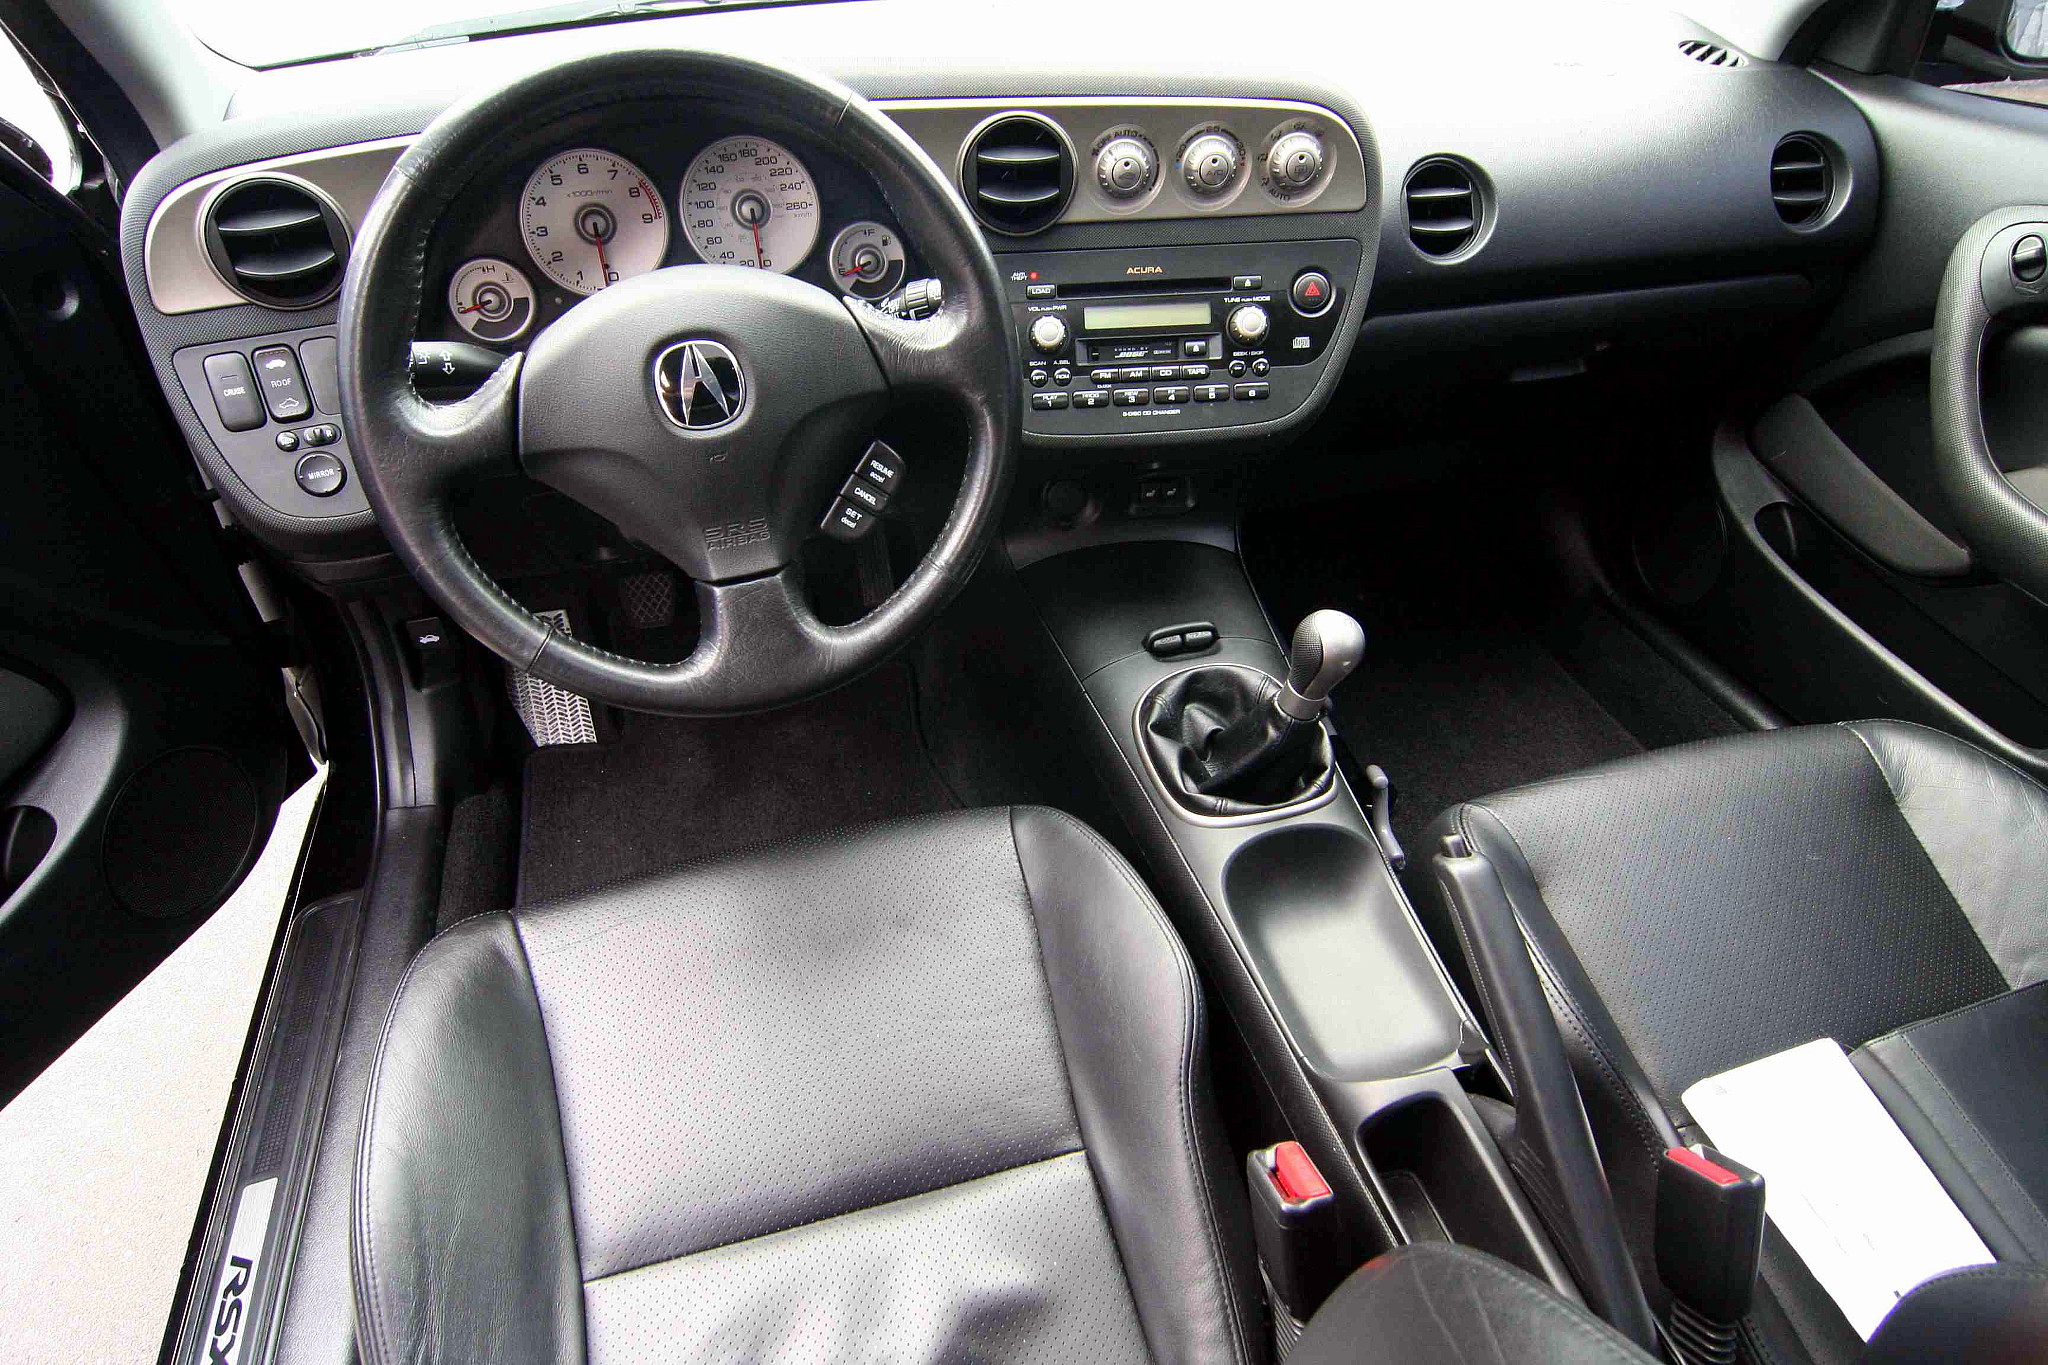 Honda Integra Technical Specifications And Fuel Economy